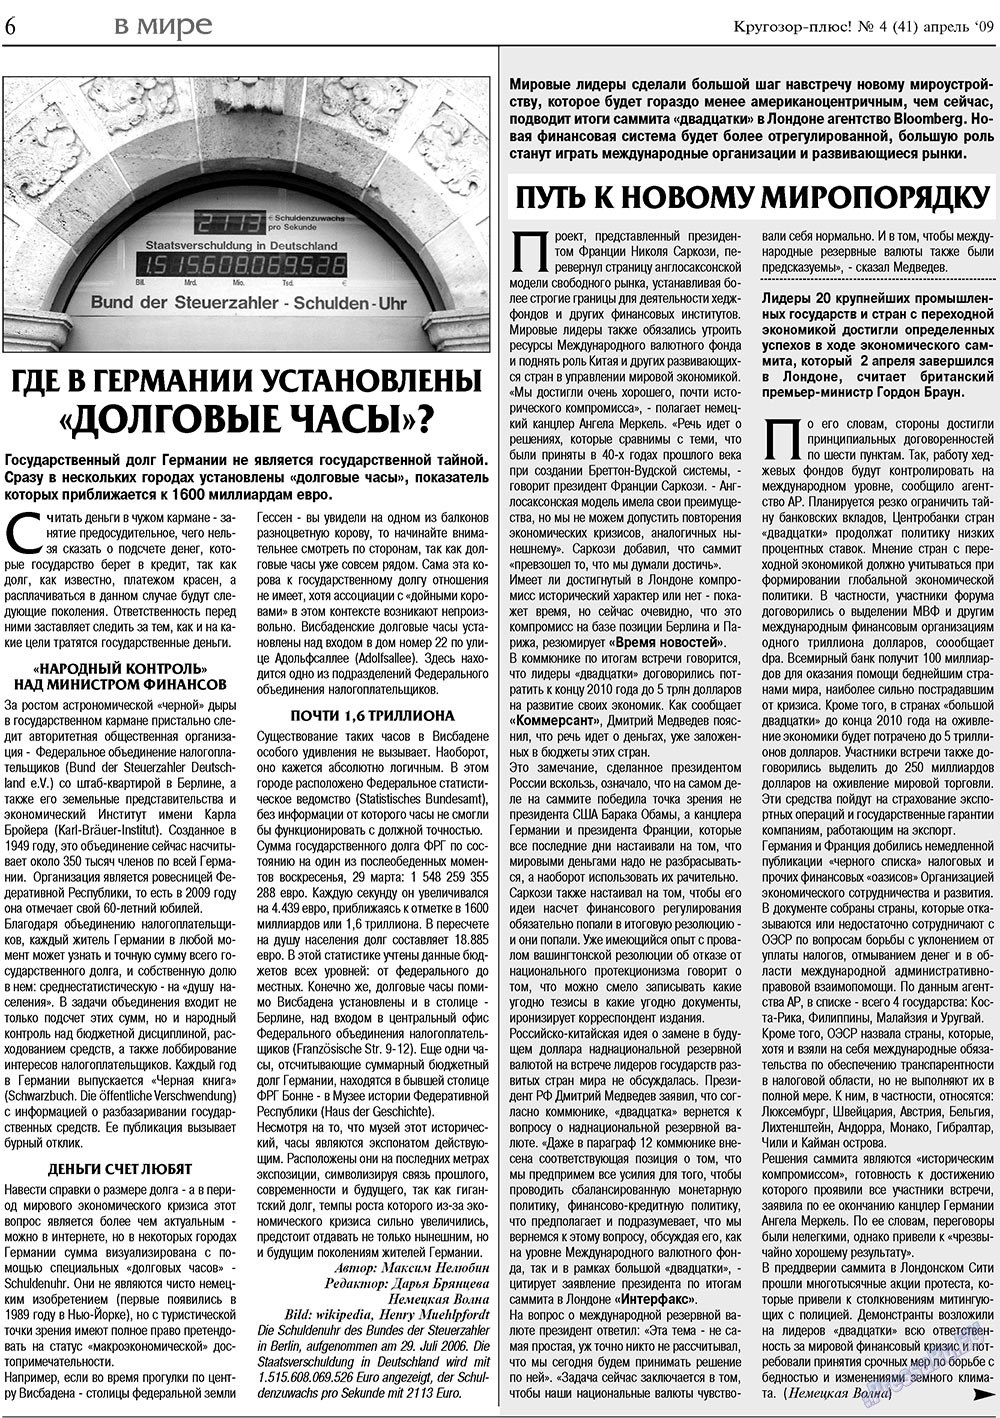 Кругозор плюс! (газета). 2009 год, номер 4, стр. 6